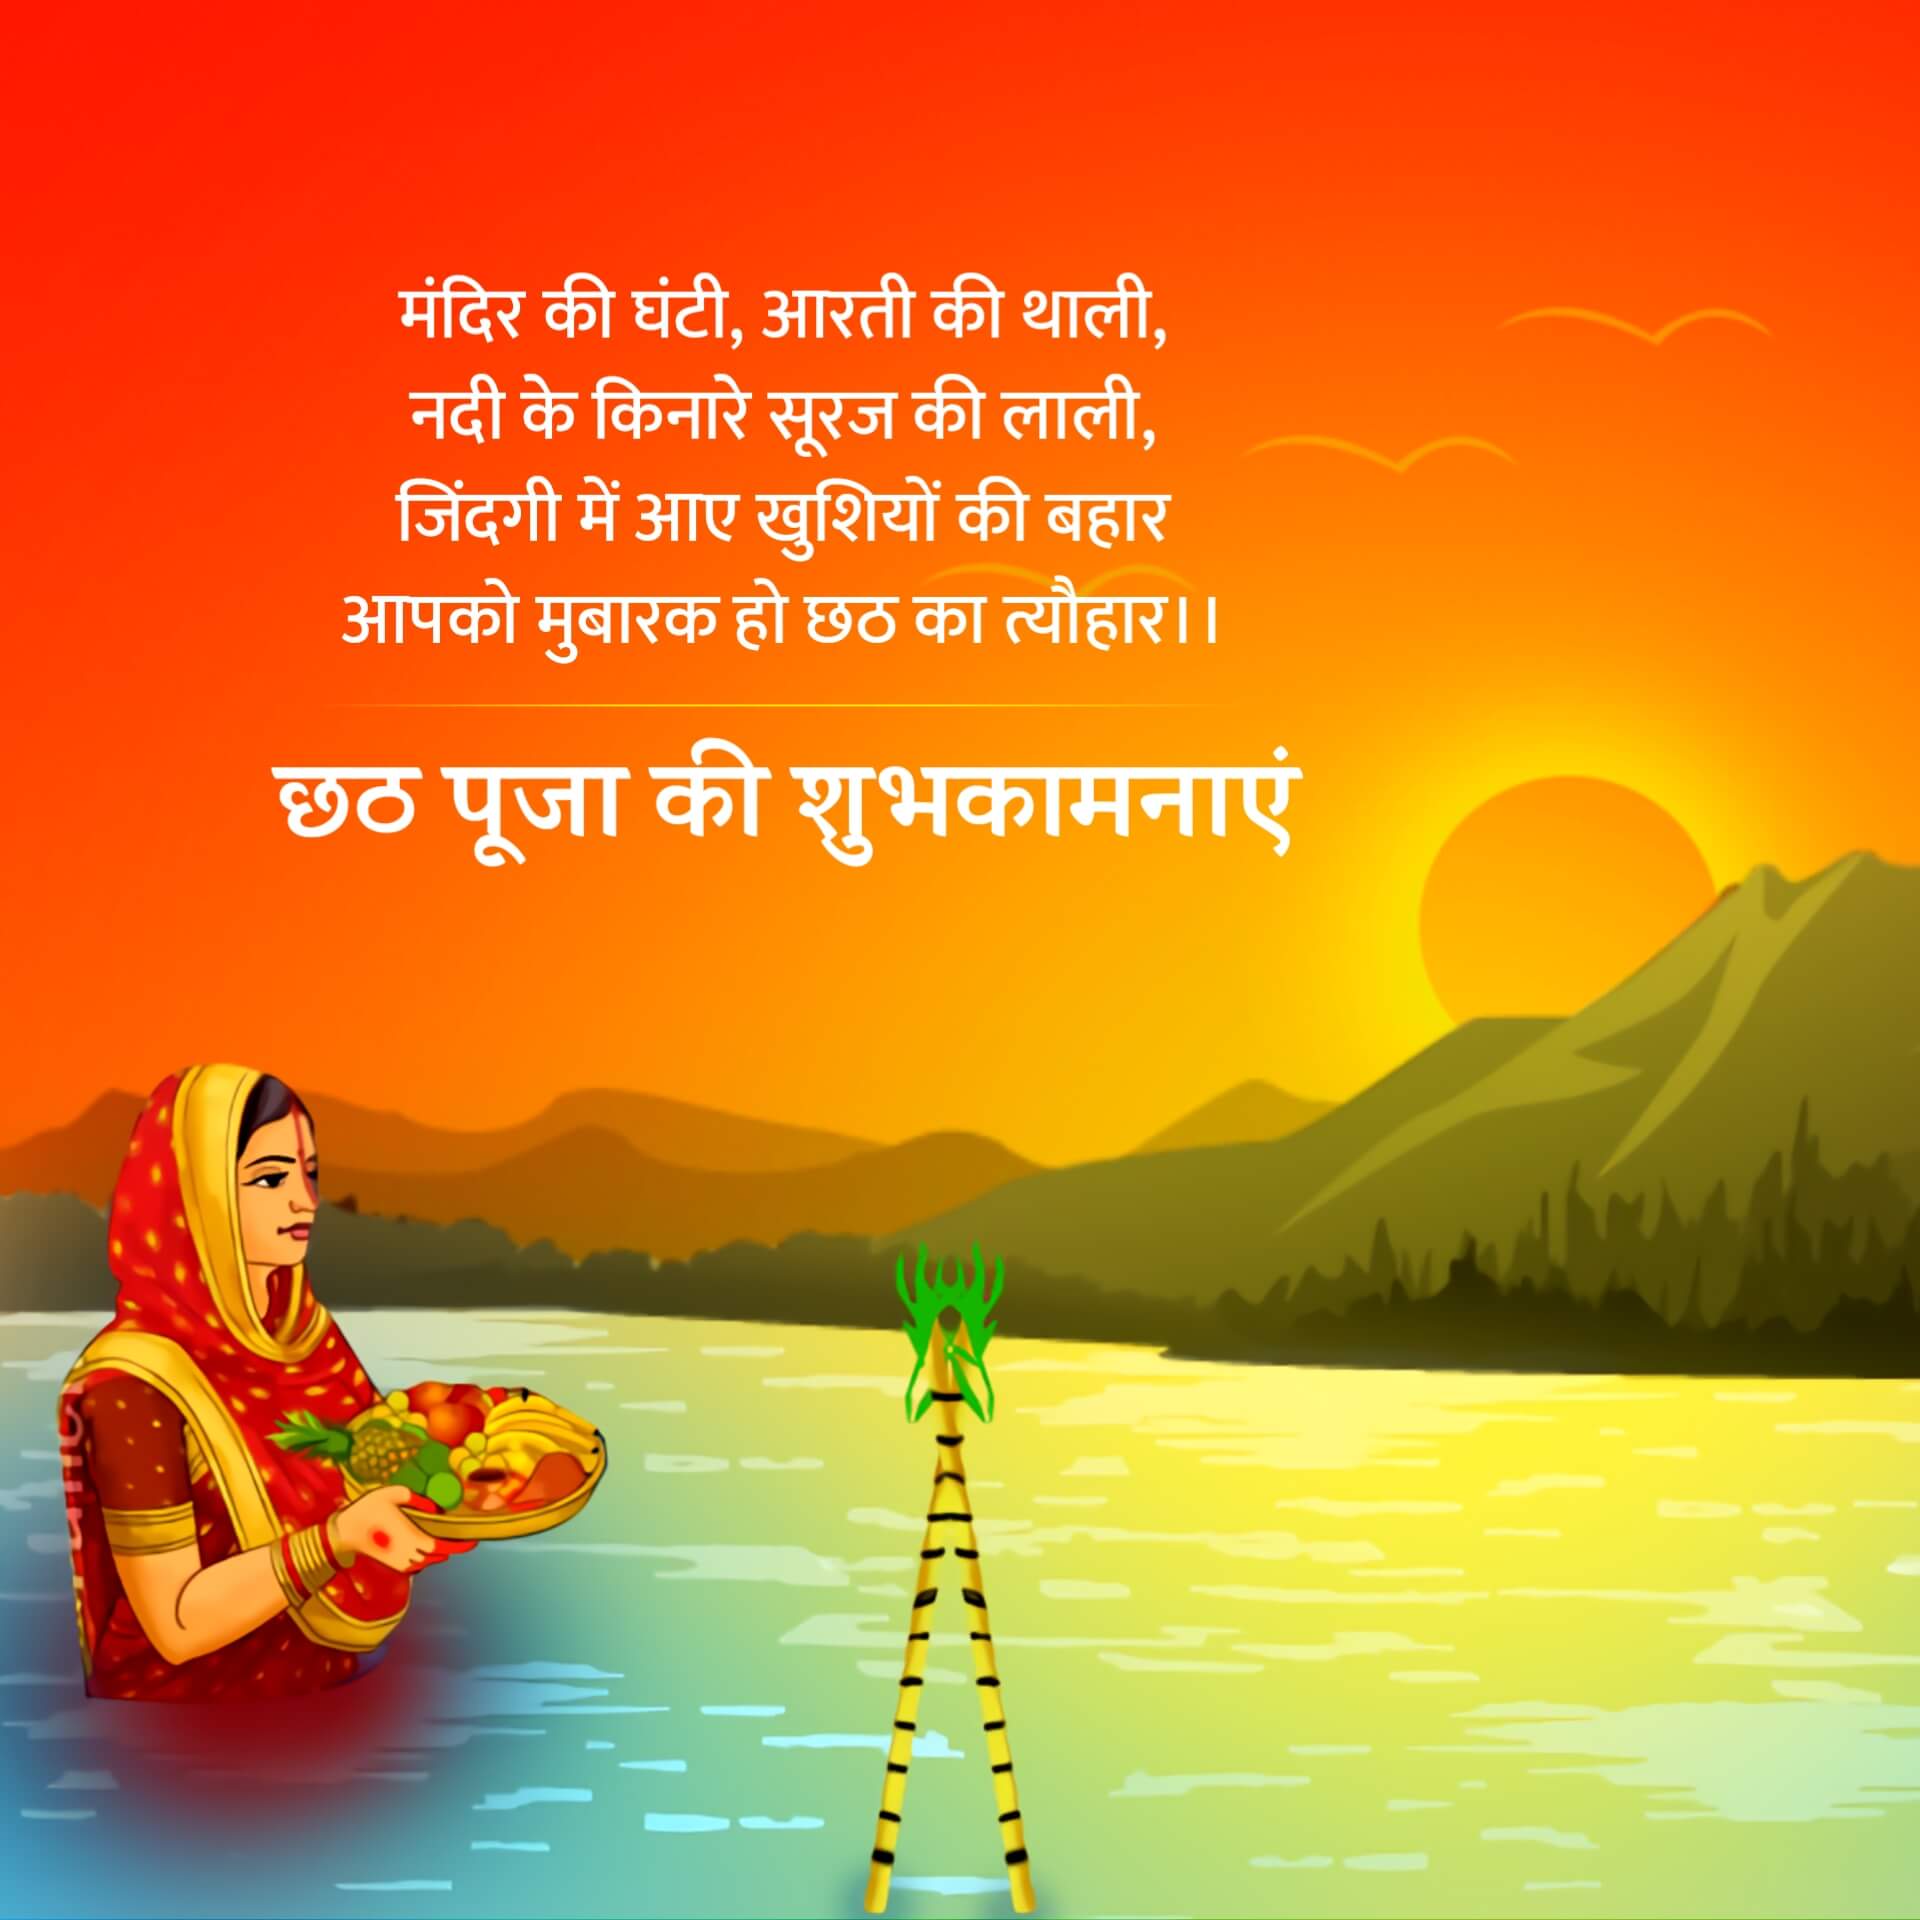 Chhath Puja Wishes in Hindi Image